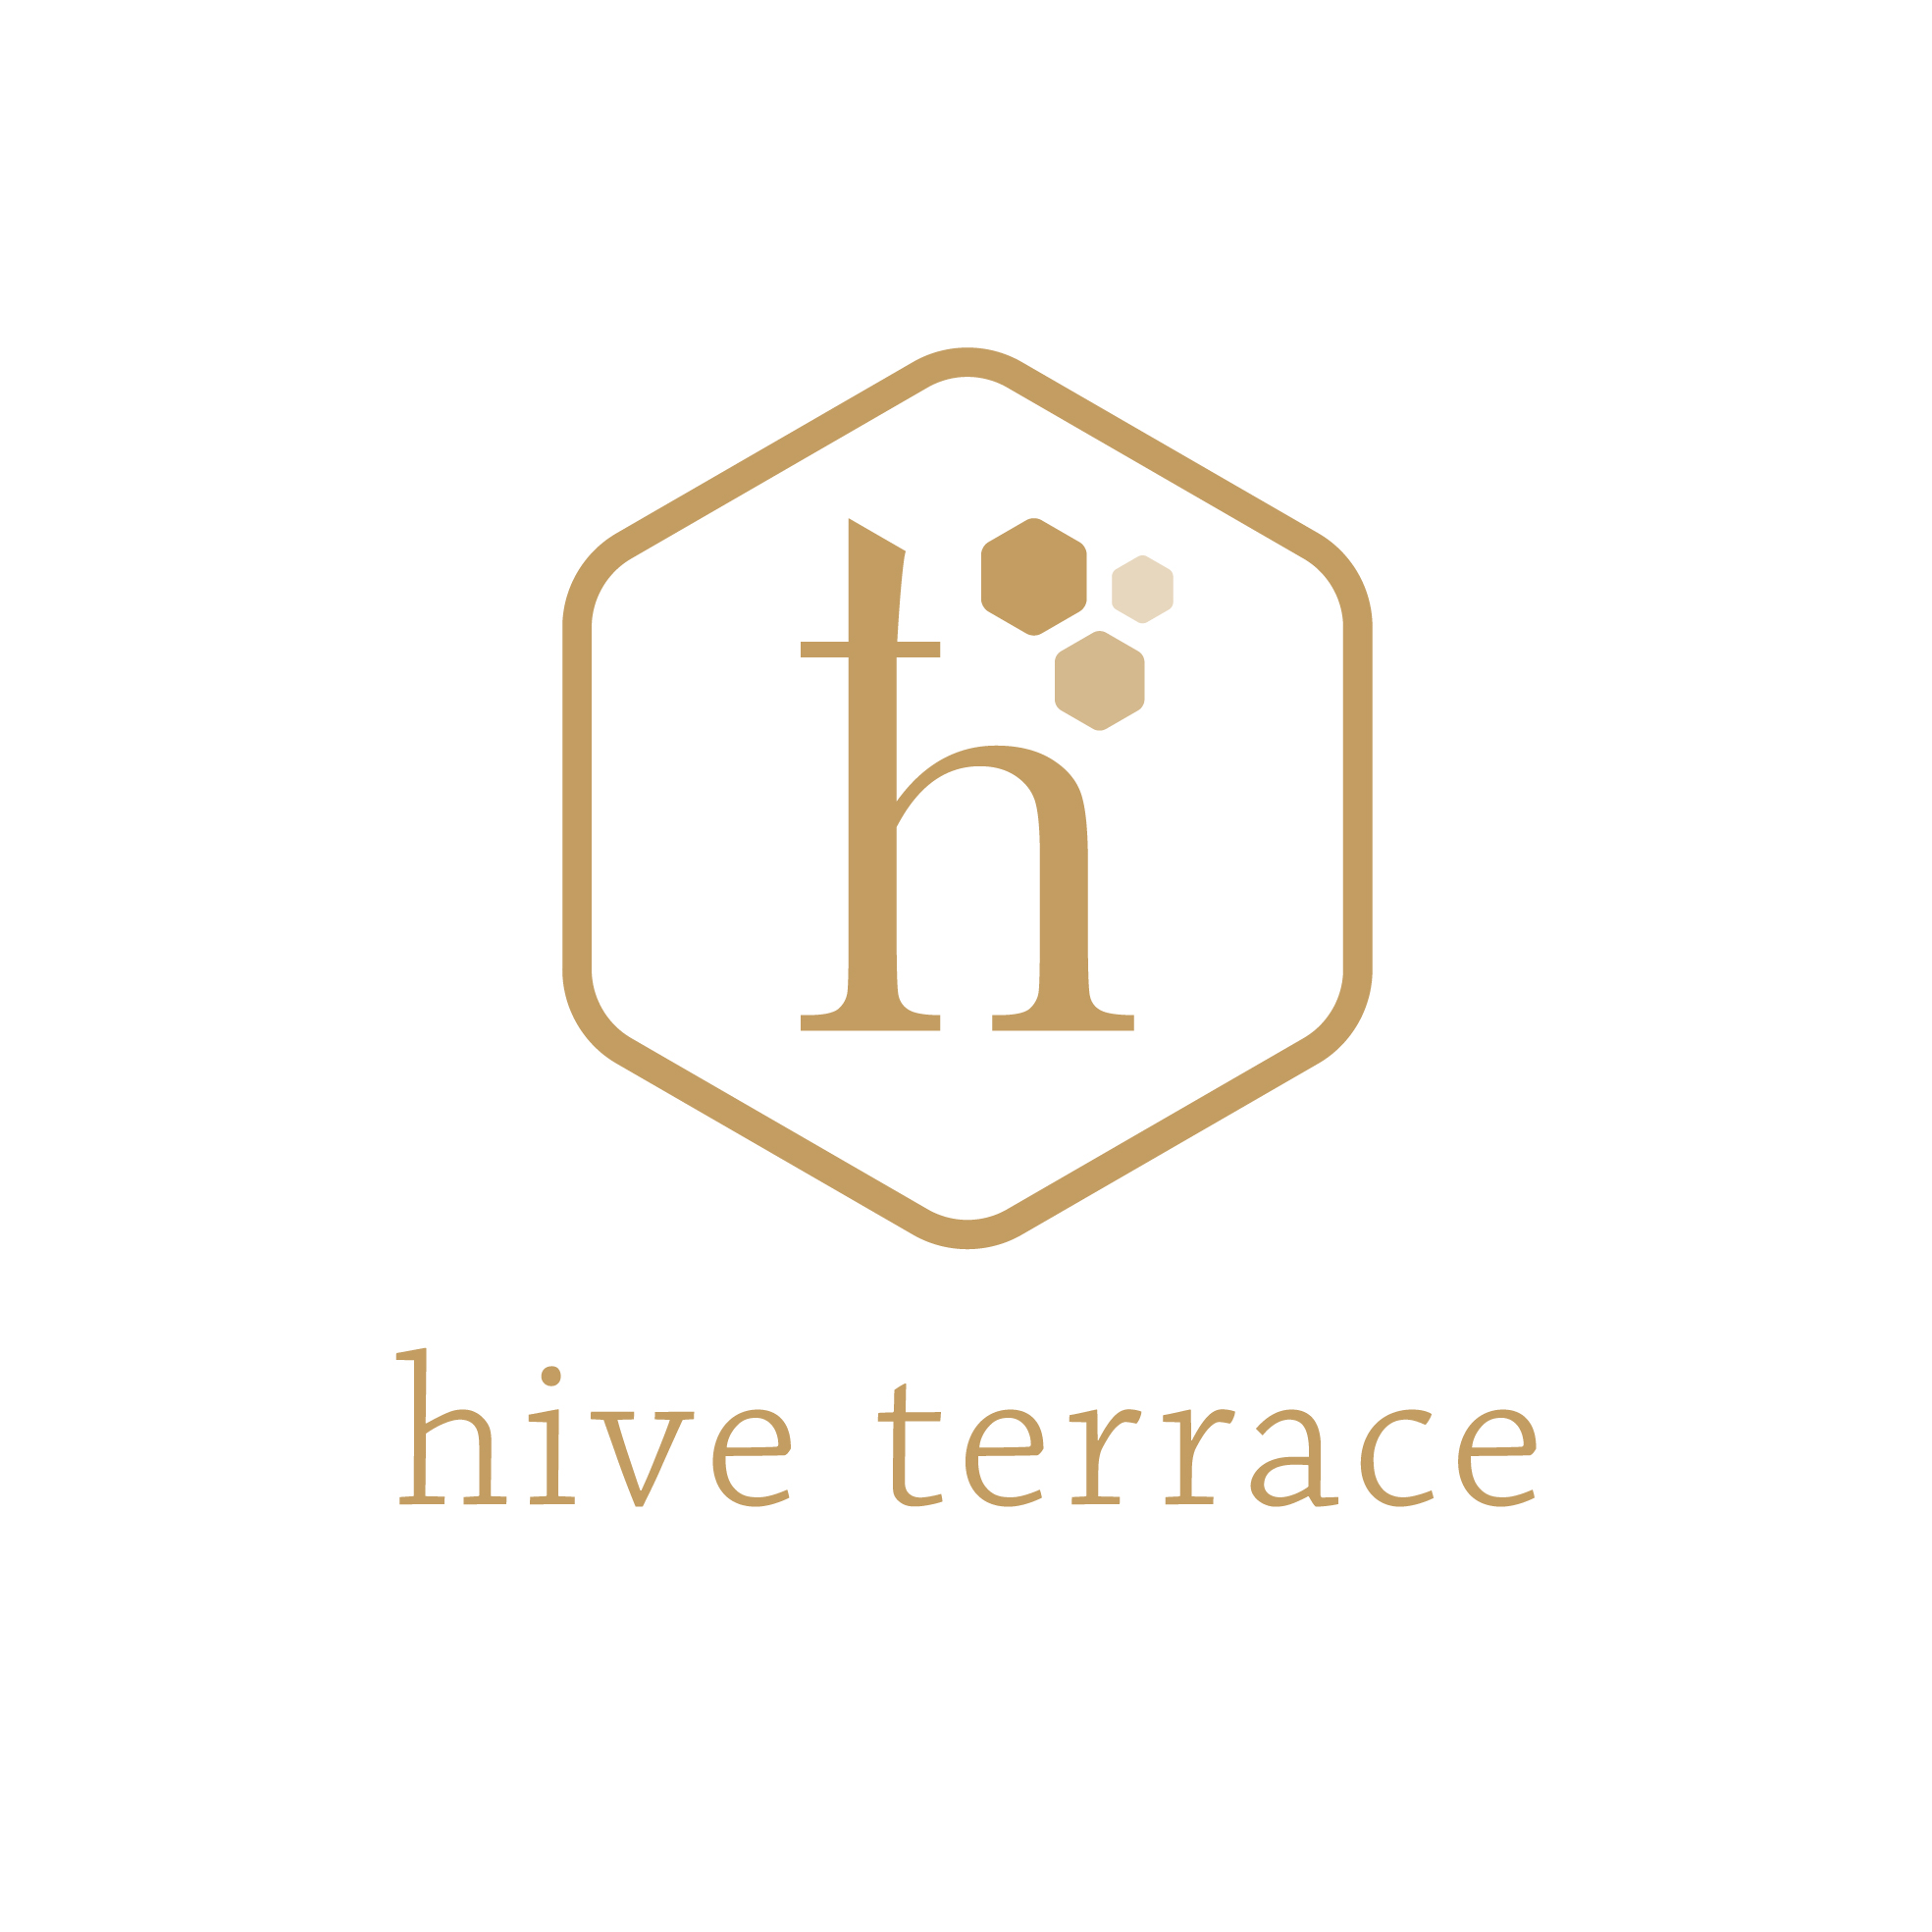 hive_terrace